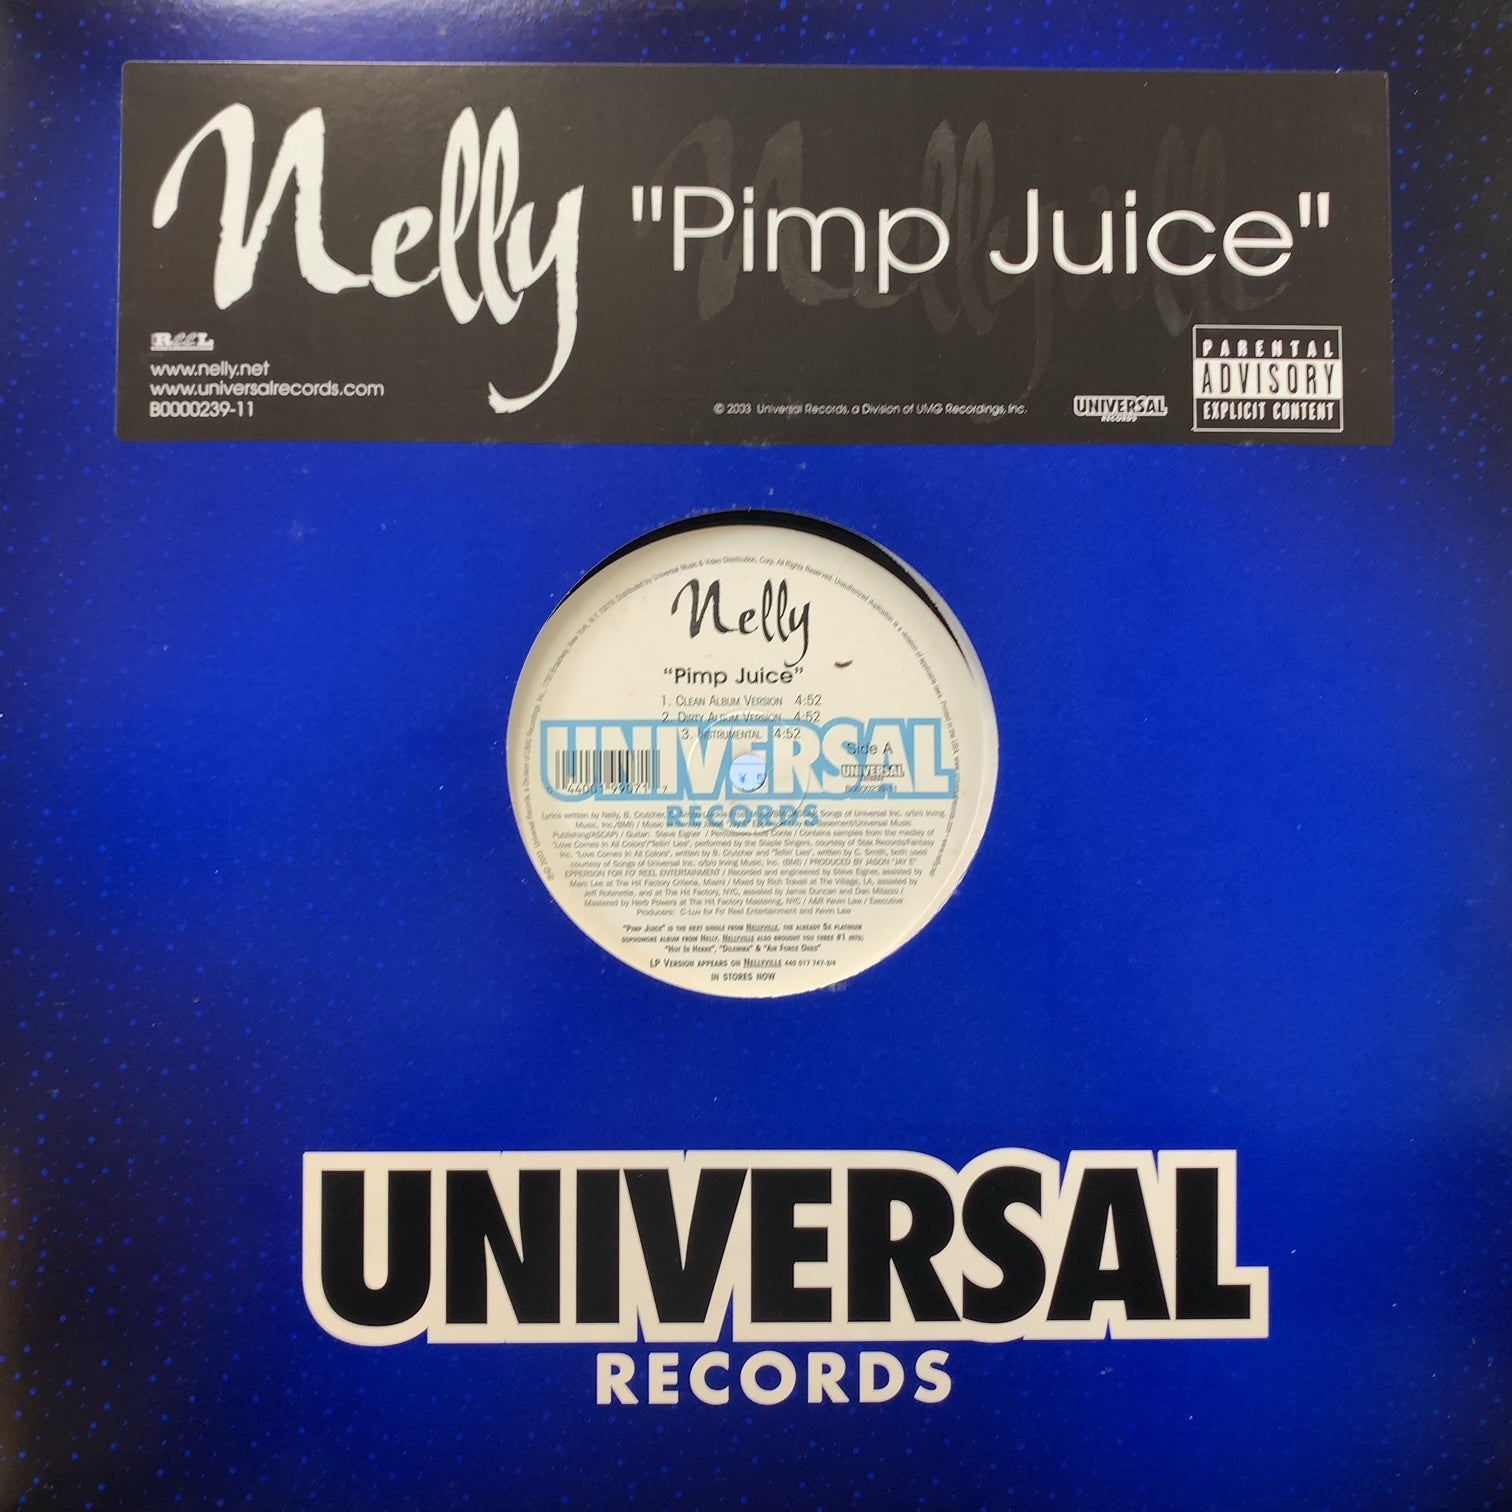 NELLY / Pimp Juice (B0000239-11